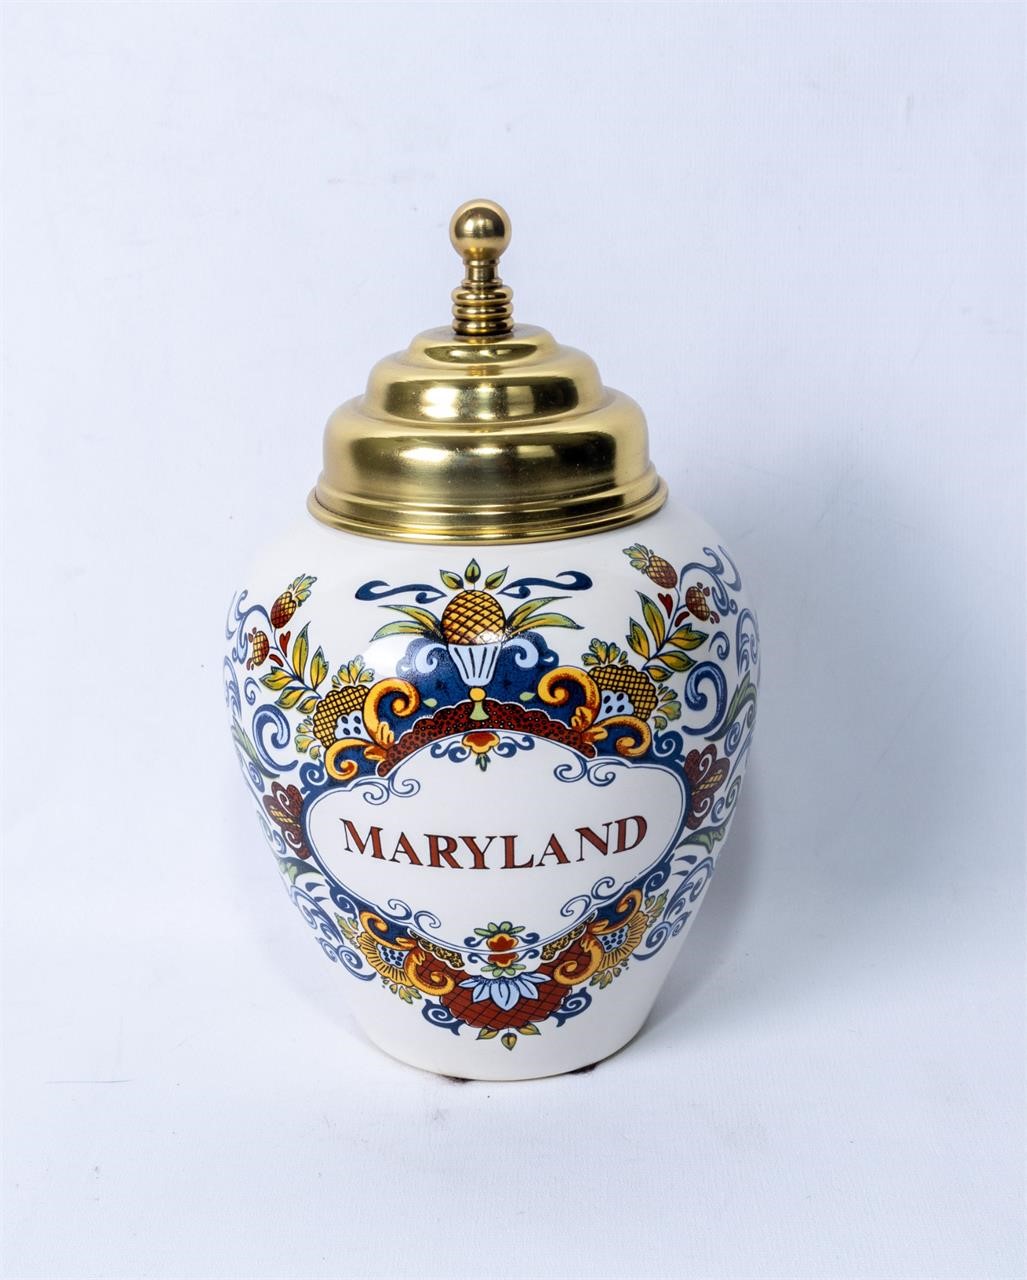 18th century reproduction tobacco jar